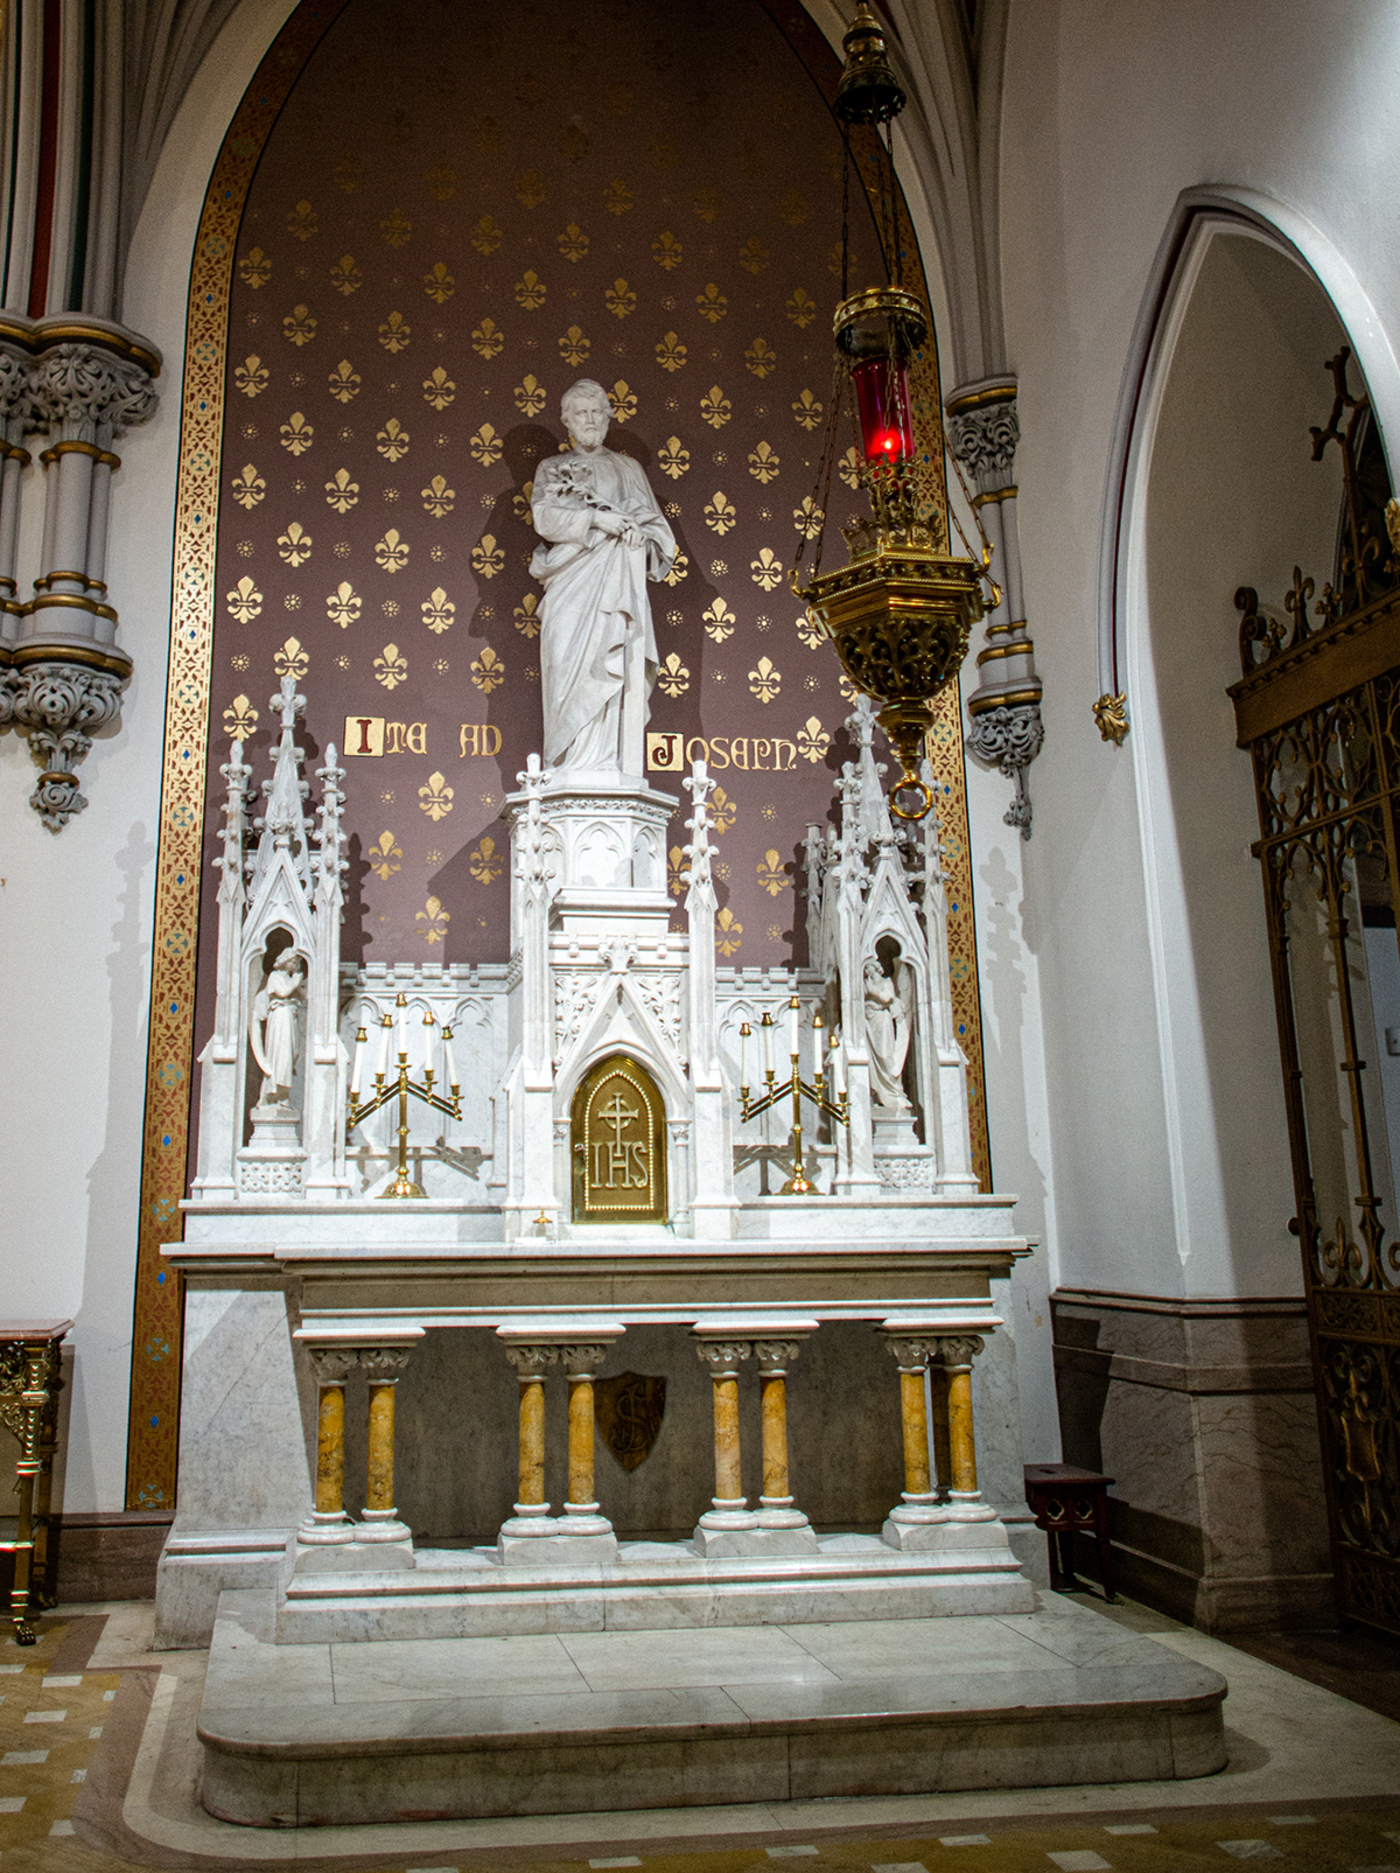 altar to Joseph at St. Francis Xavier church in Park Slope, Brooklyn